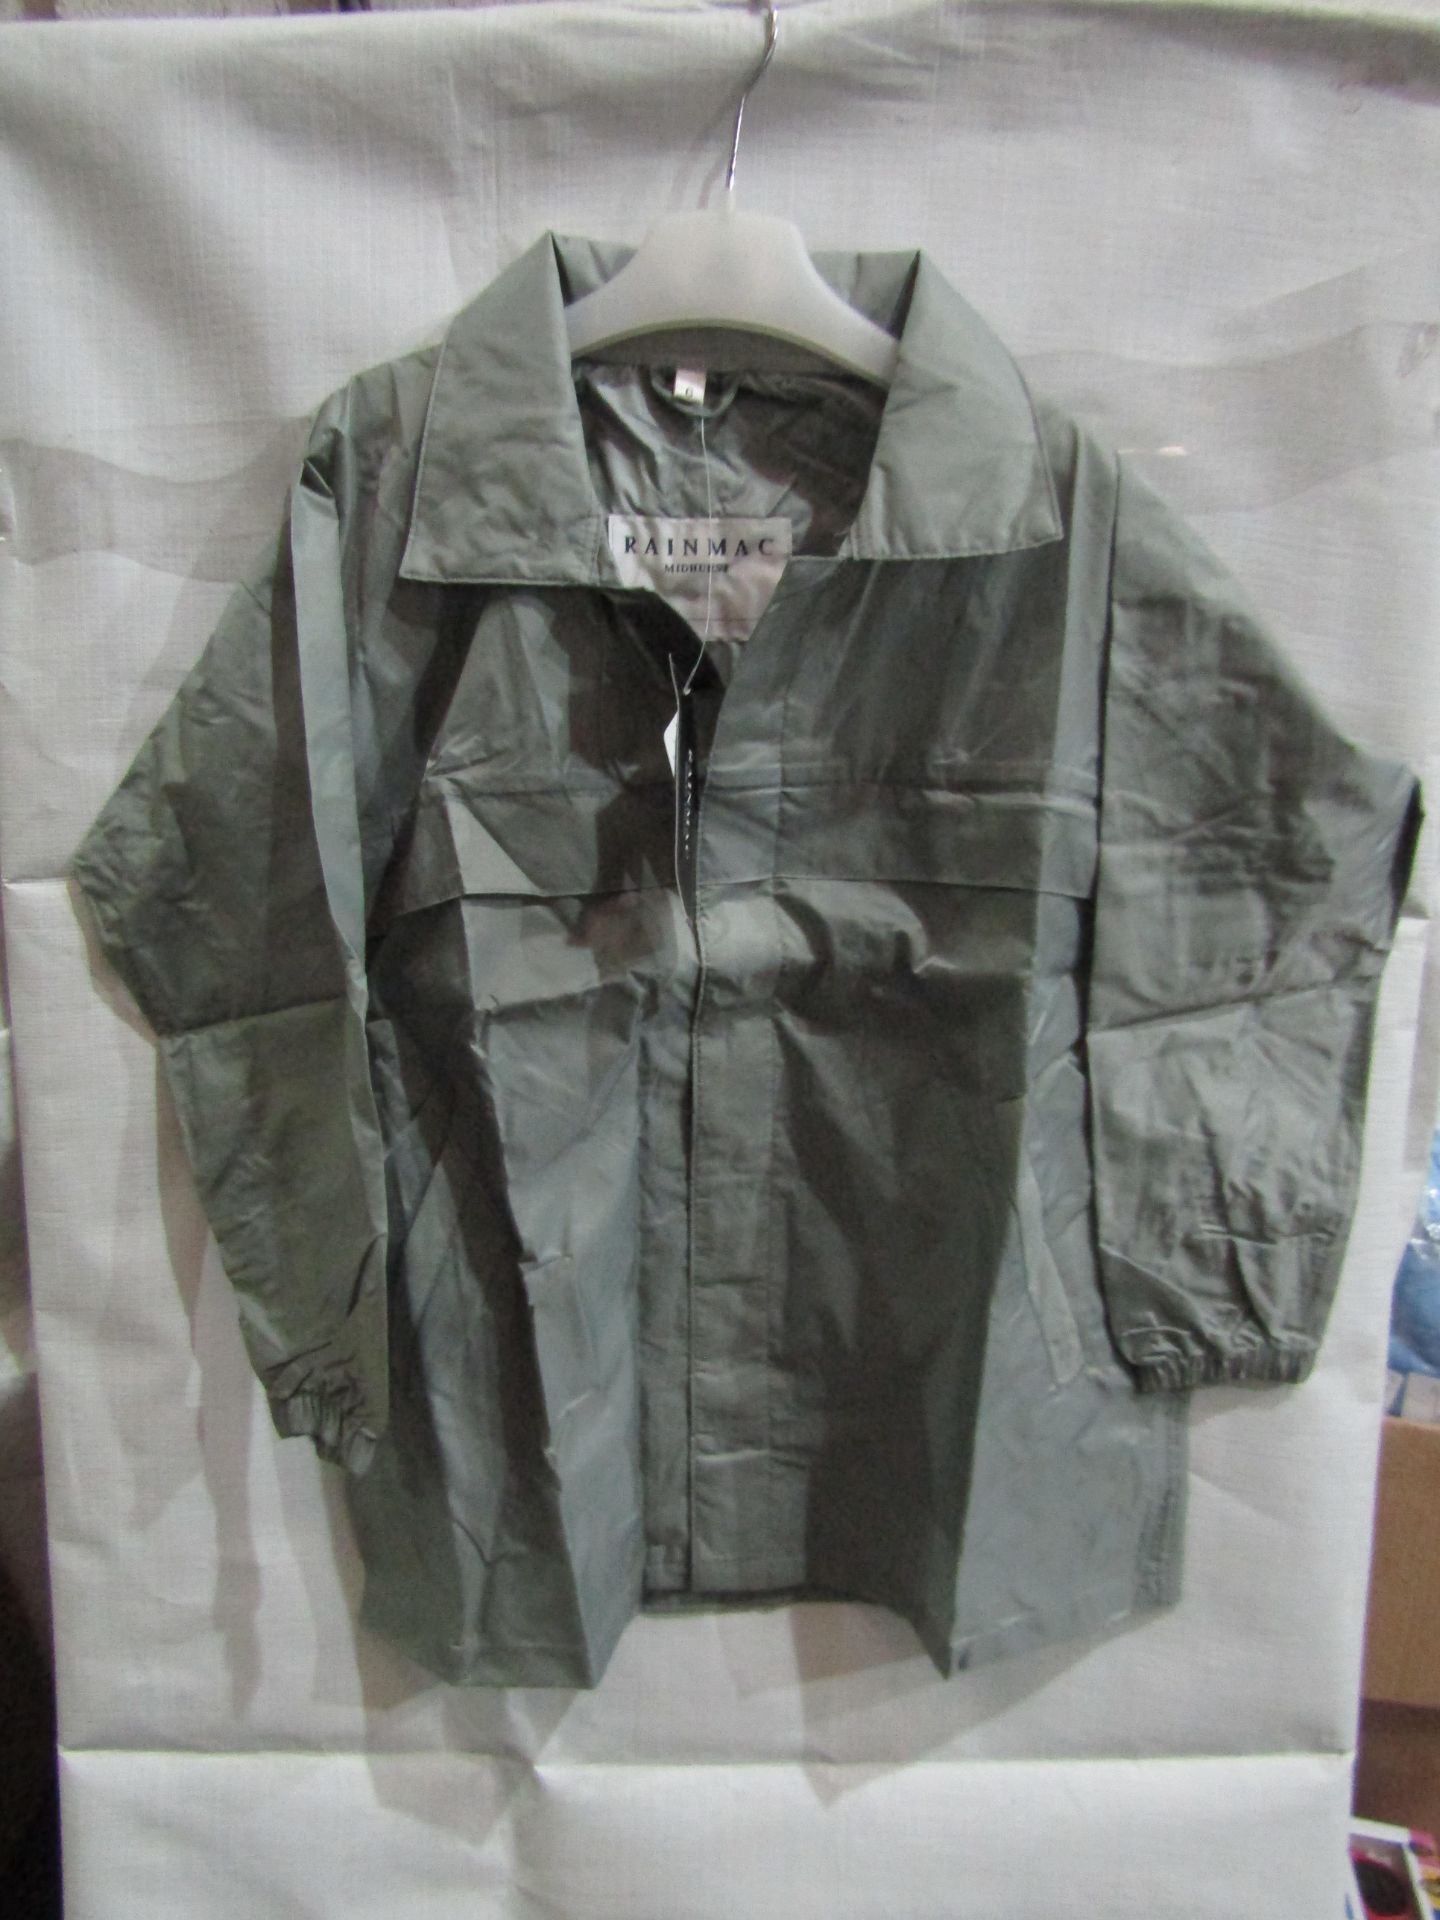 Rainmac Childrens Grey Thin Rain Coat, Size: 6 - Unused & Packaged.